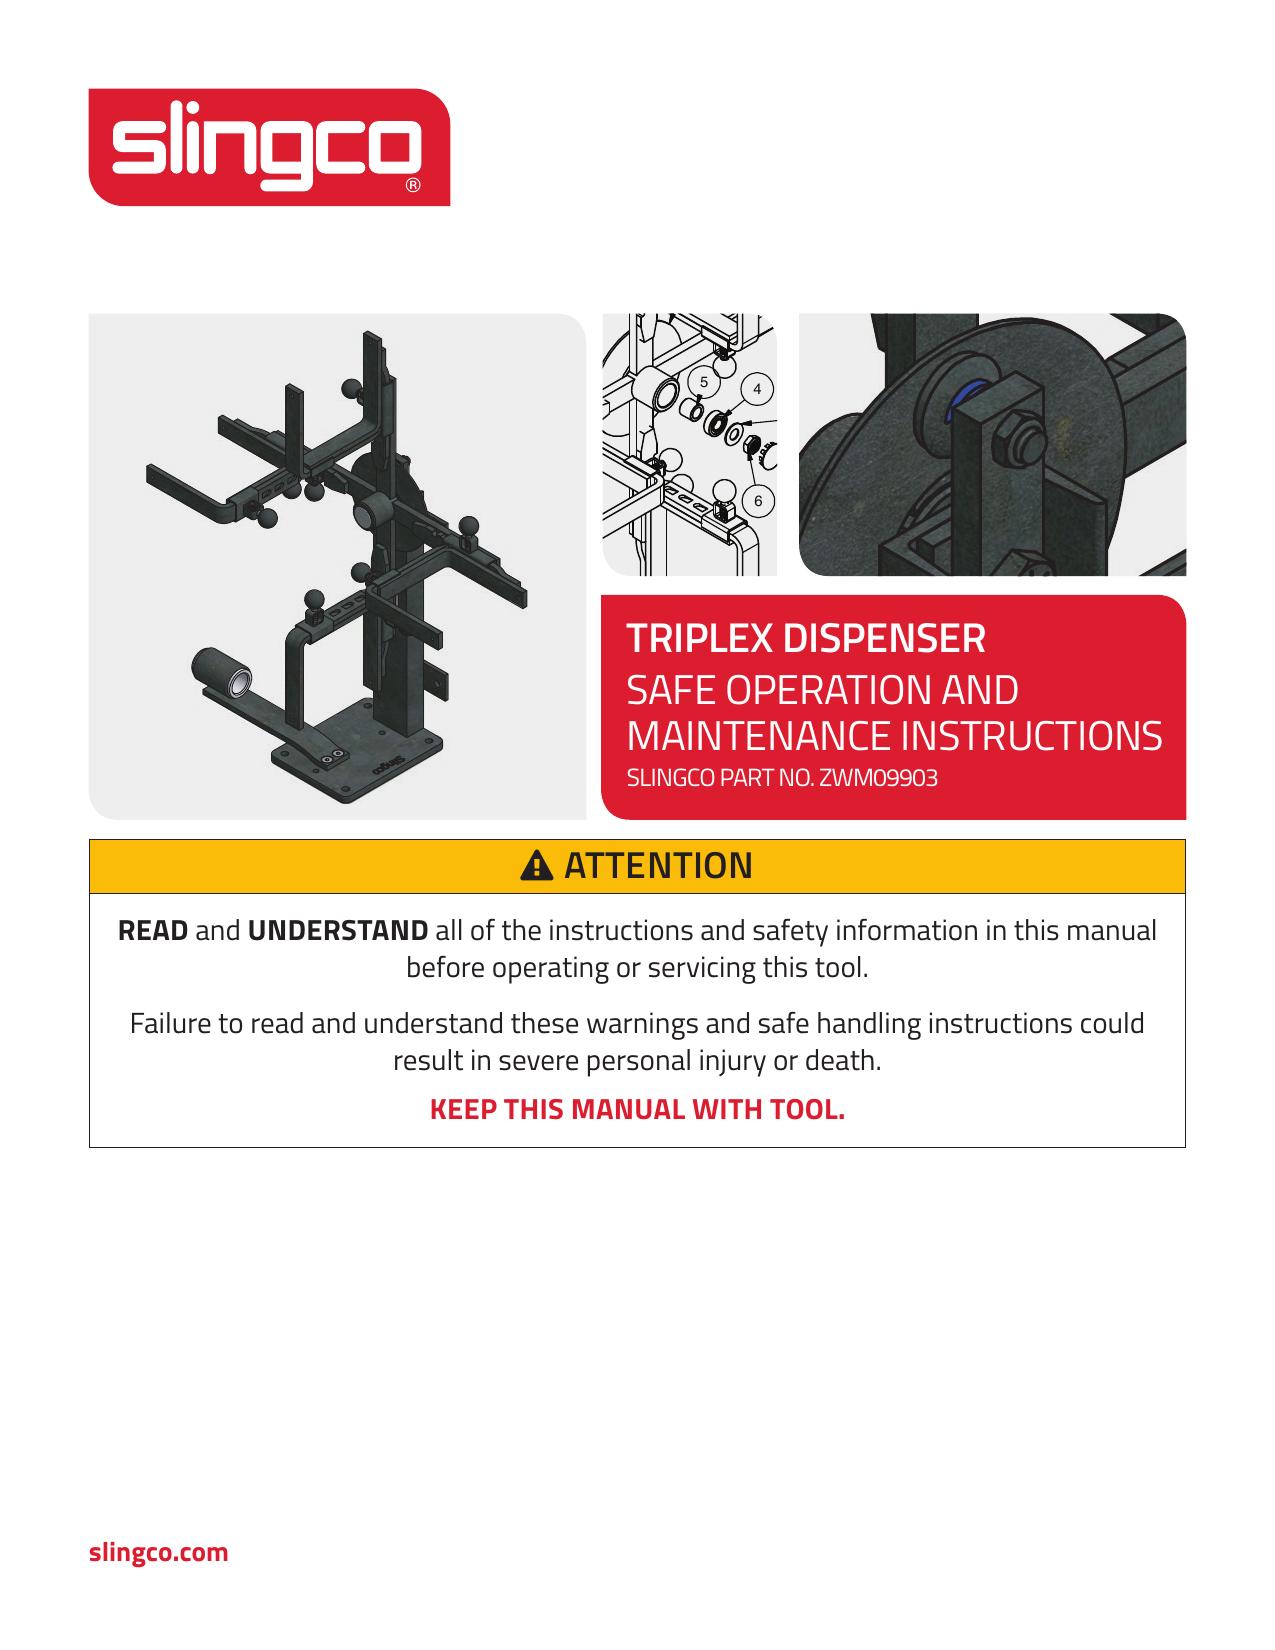 Triplex Dispenser Operating Instructions